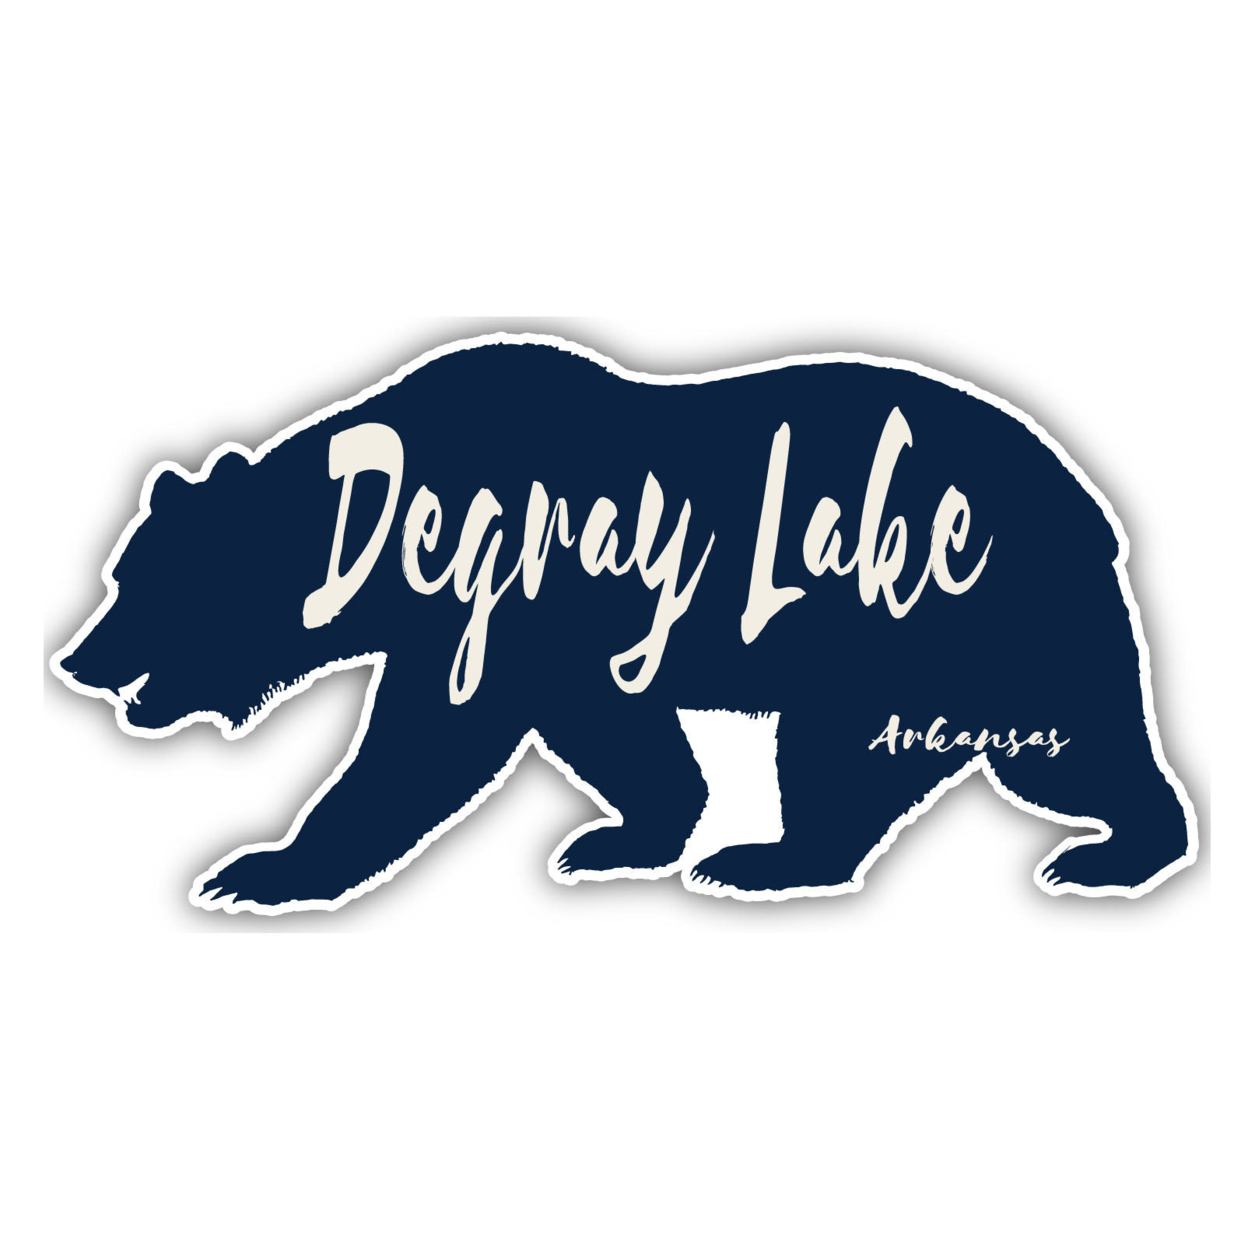 DeGray Lake Arkansas Souvenir Decorative Stickers (Choose Theme And Size) - 4-Pack, 8-Inch, Bear